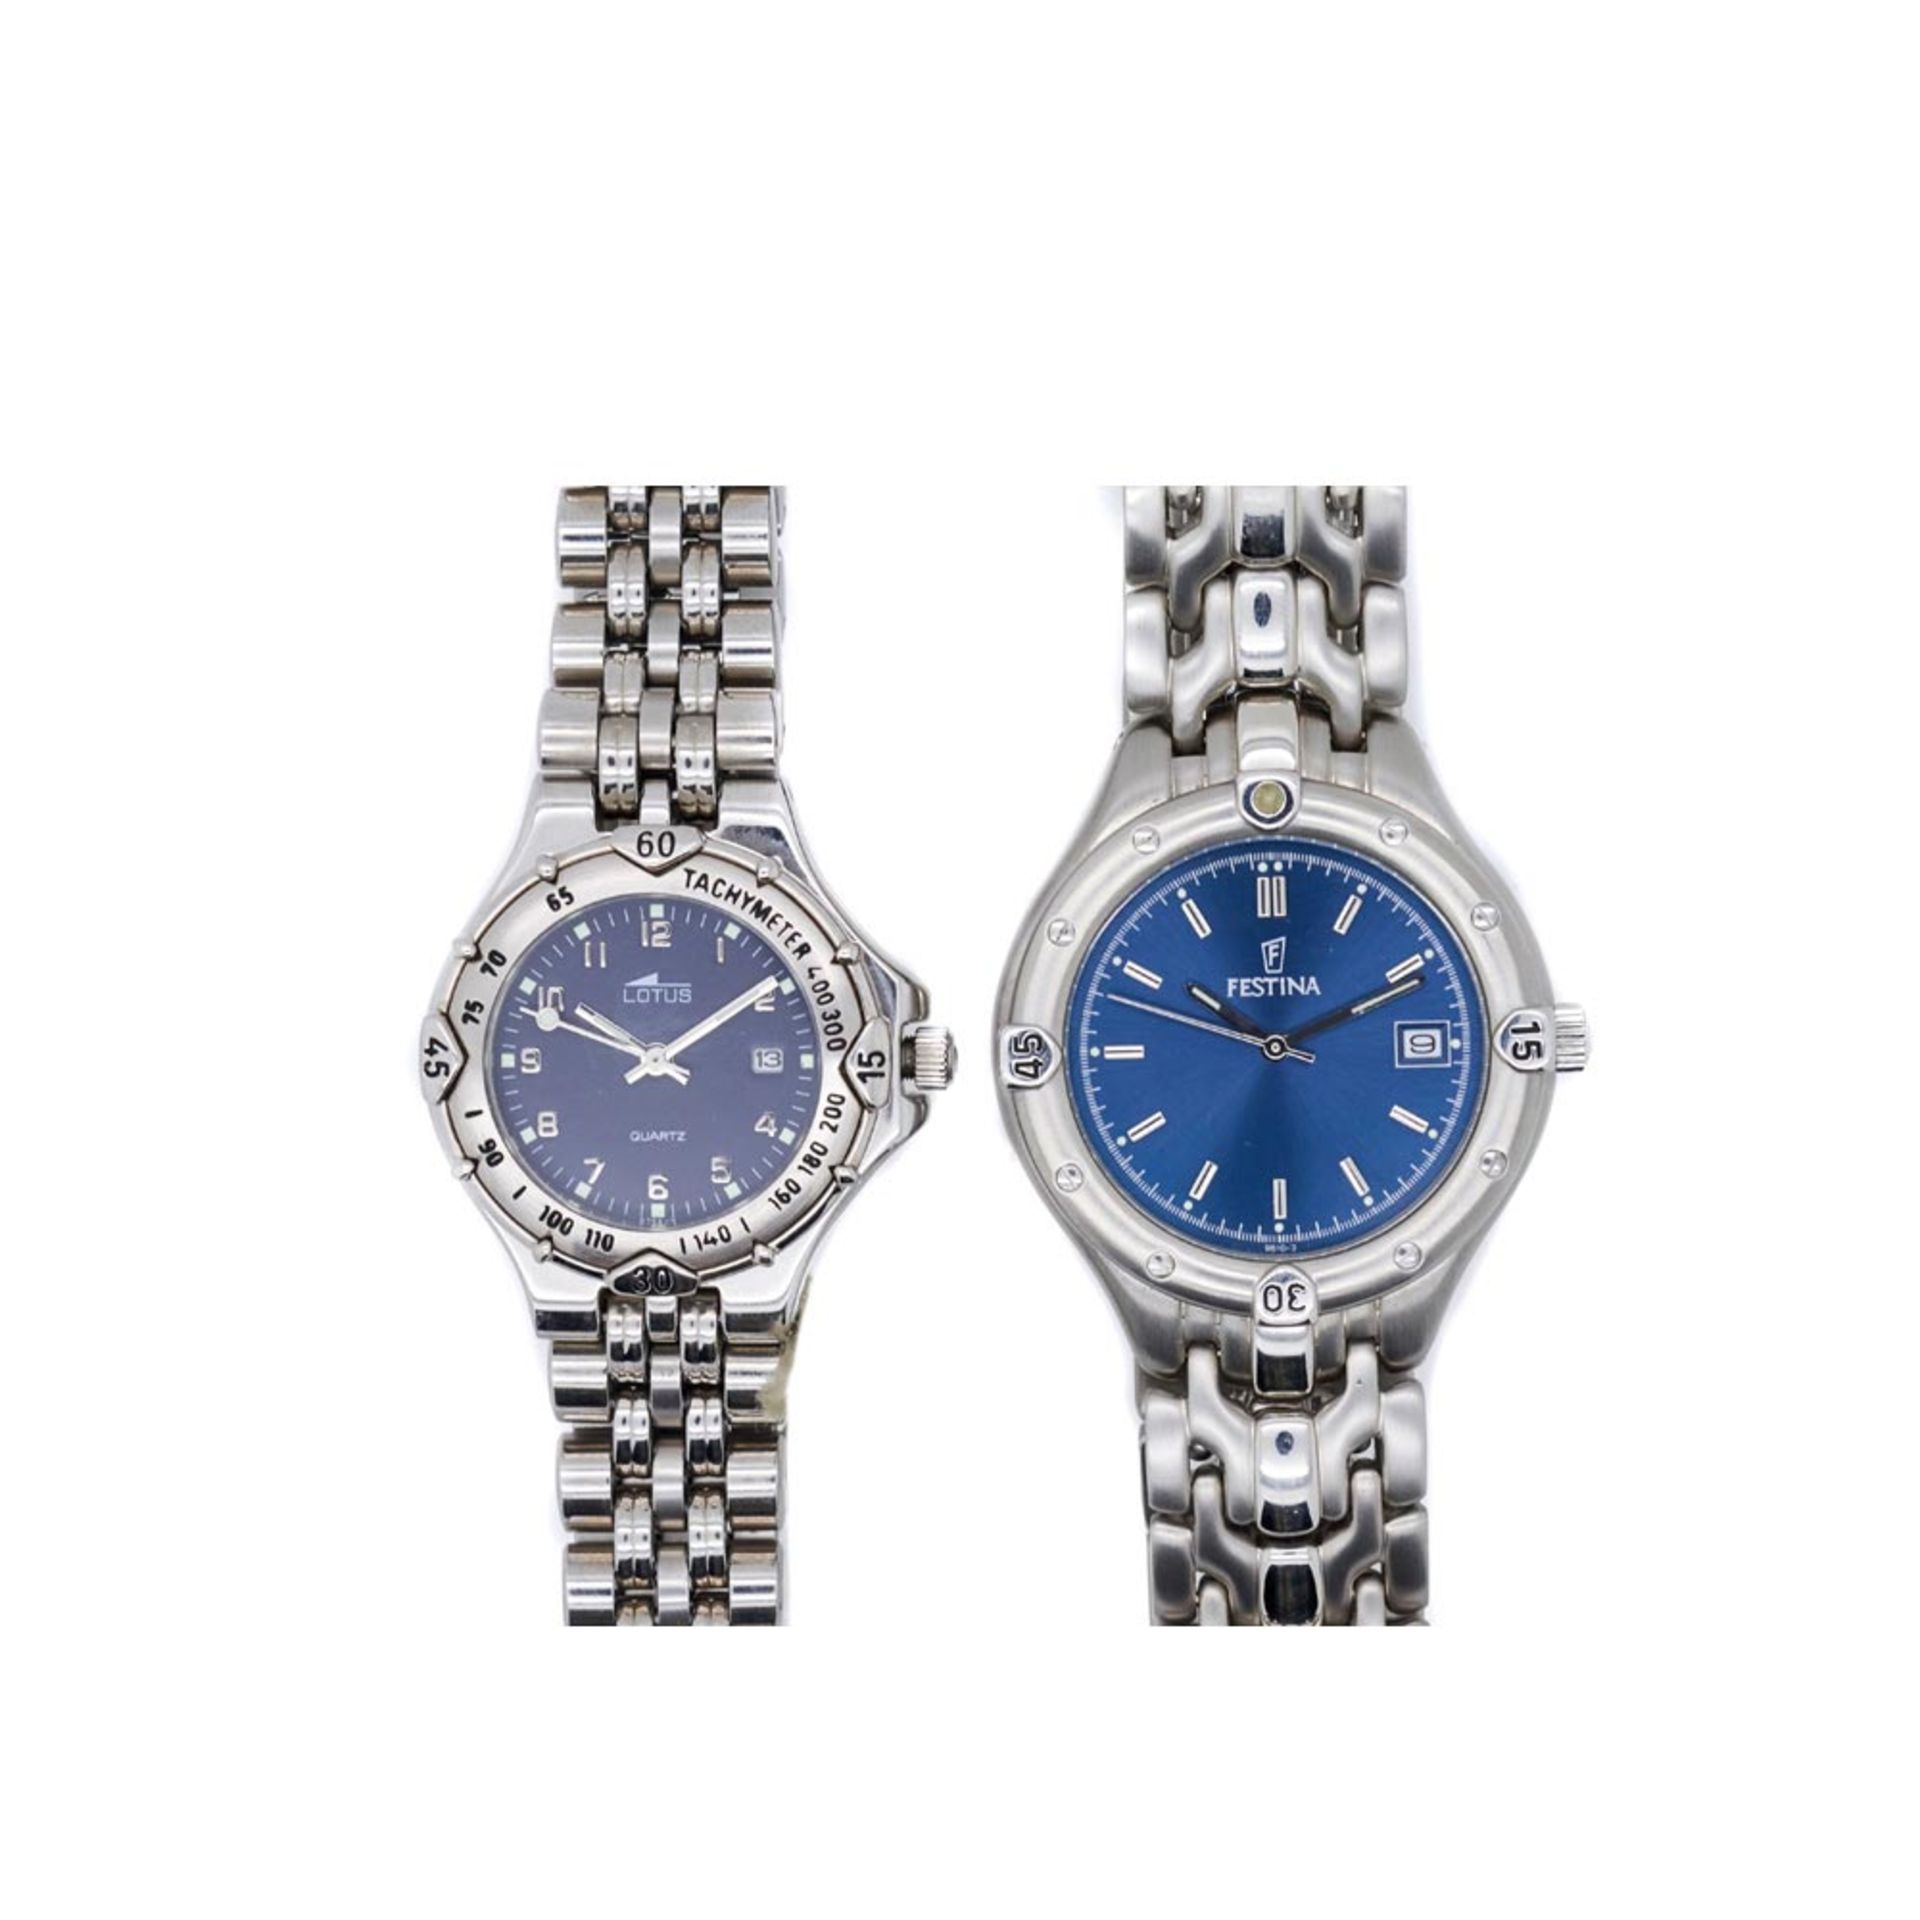 Lotus and Festina steel wristwatch lot